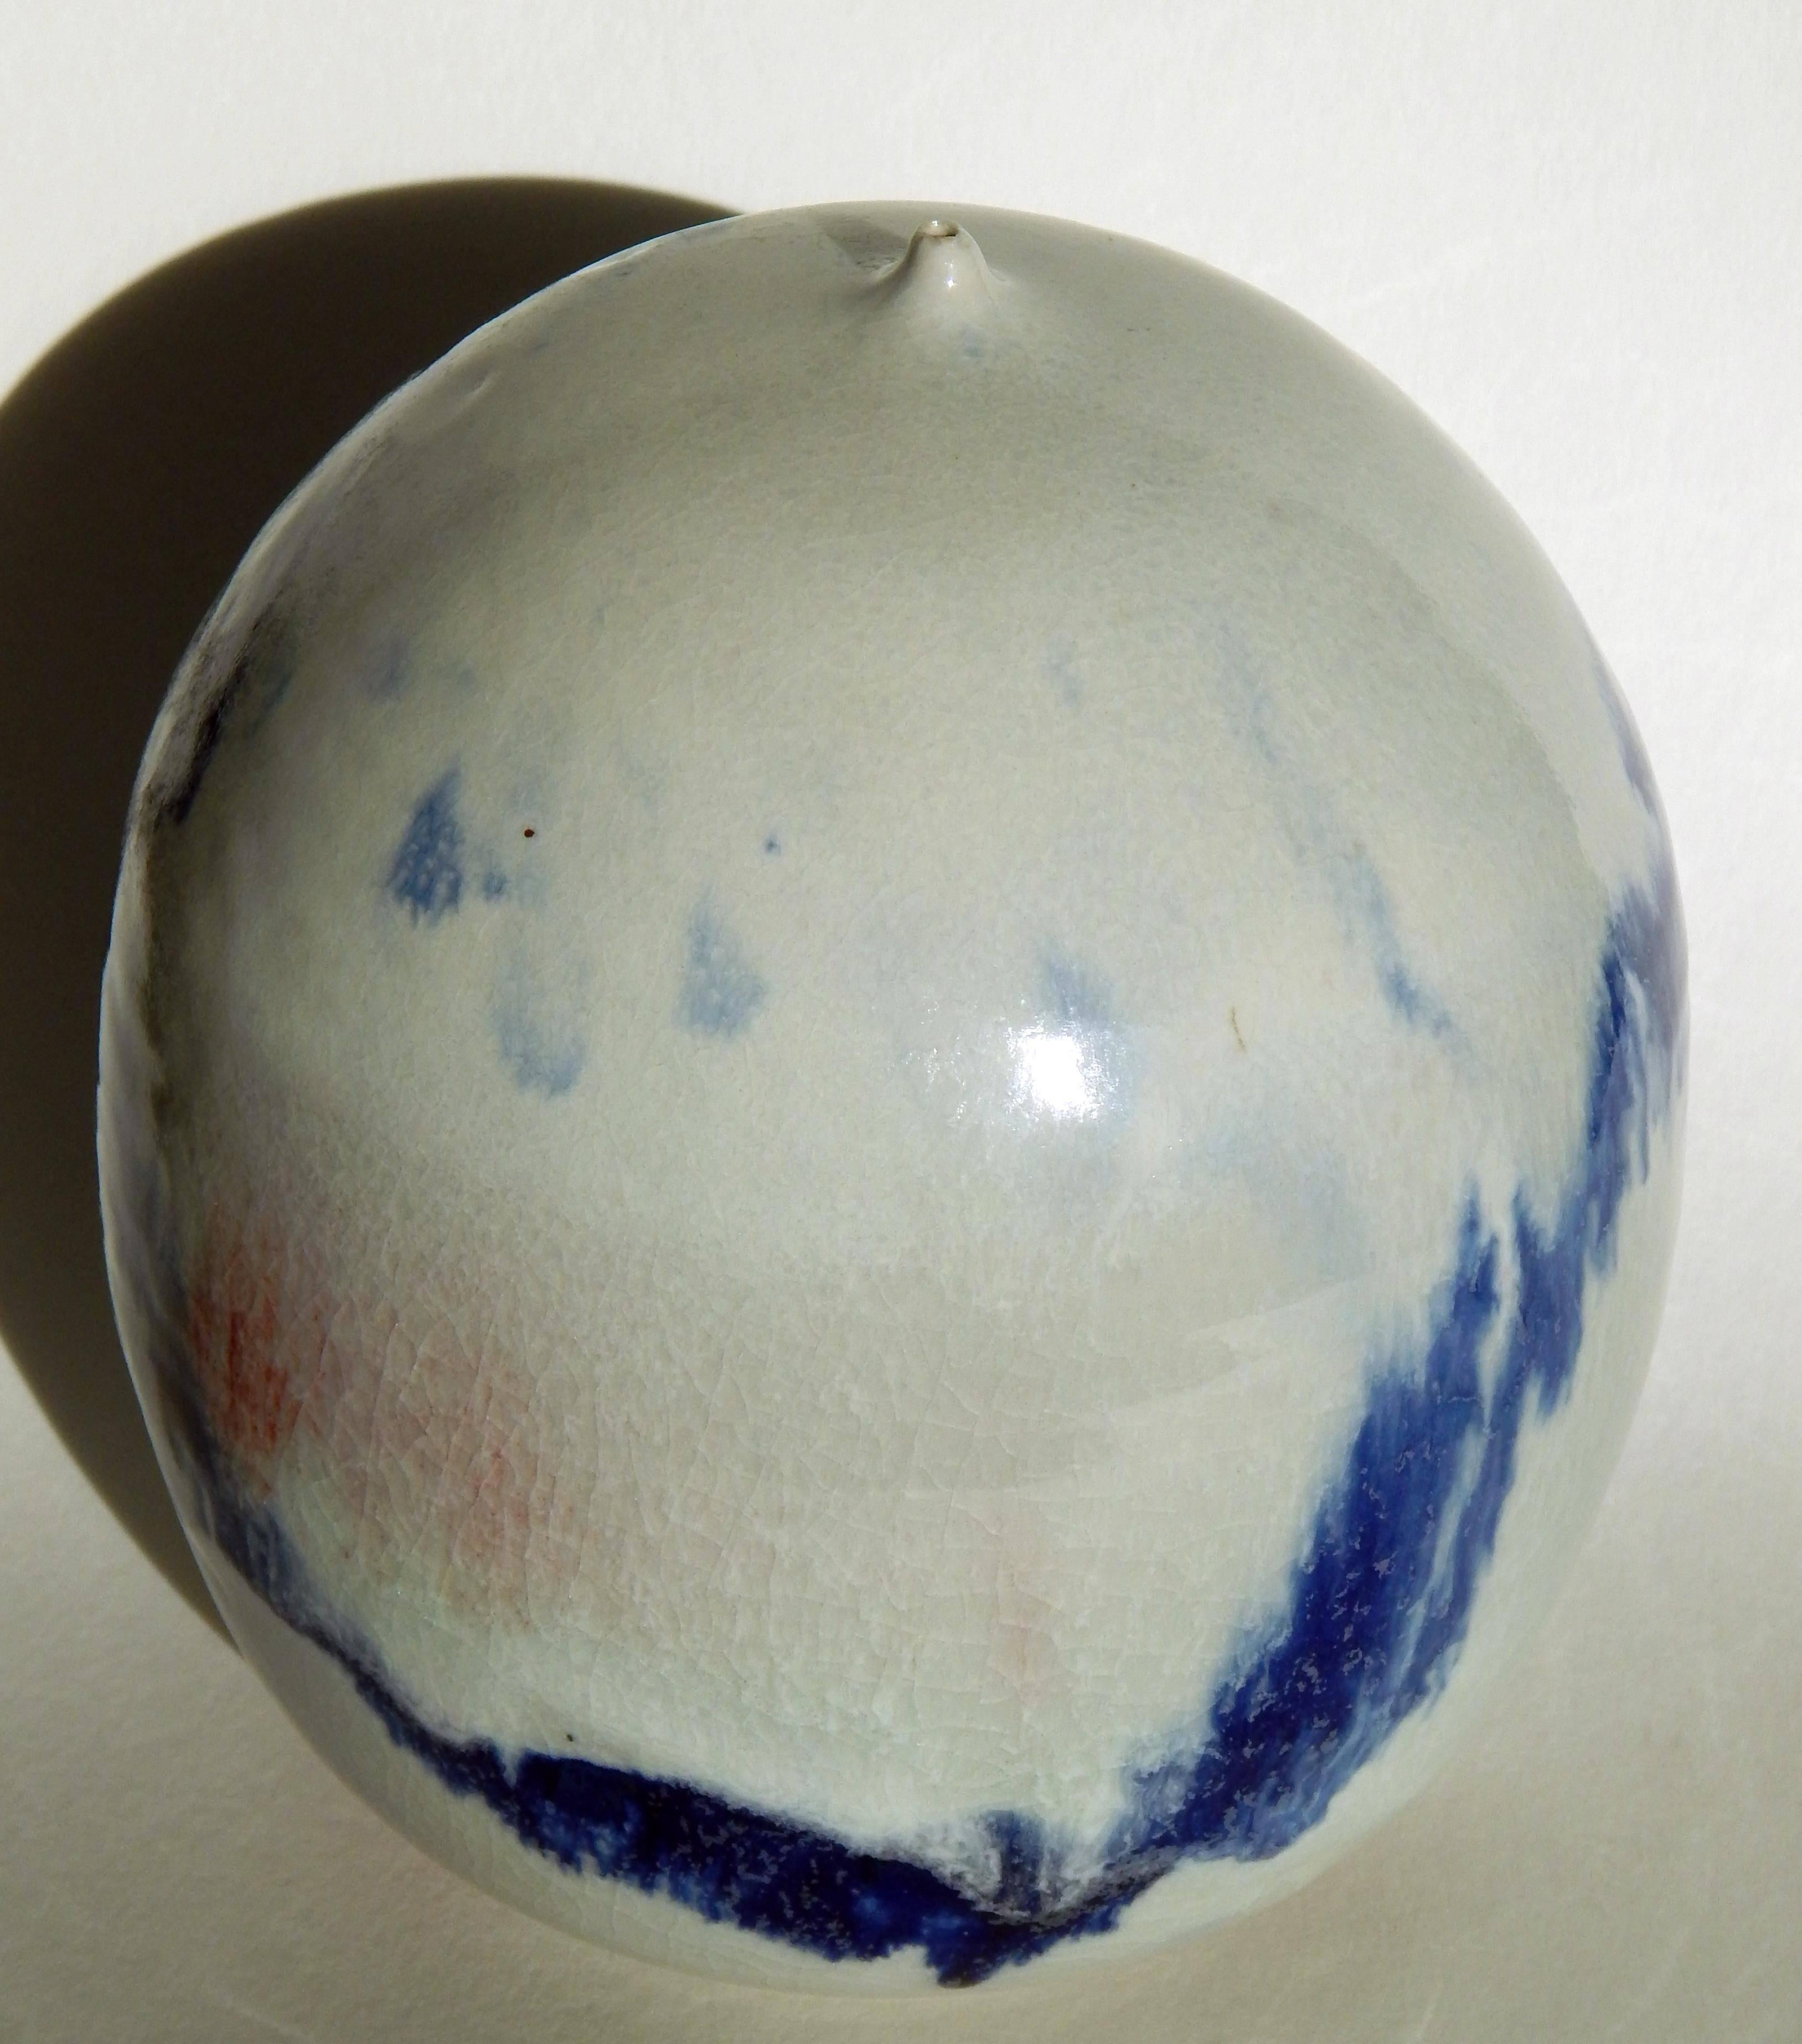 Turned Toshiko Takeazu Moon Pot in Blue and White, circa 1970s